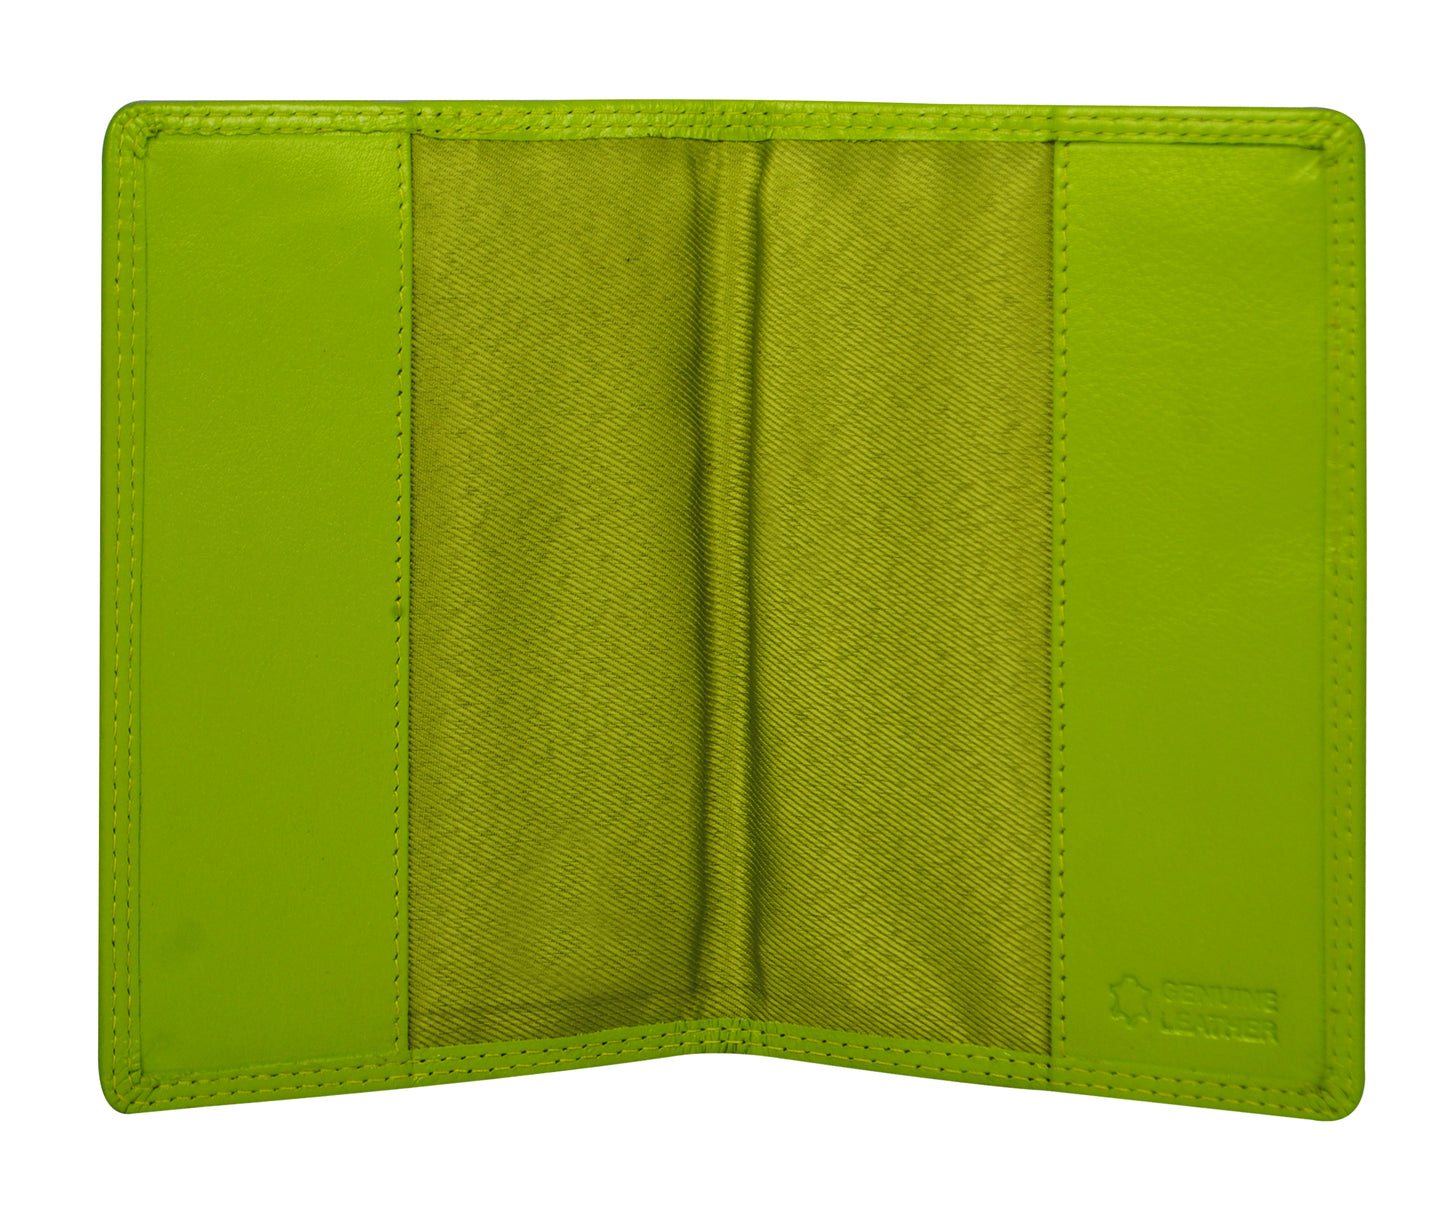 Calfnero Genuine Leather Passport Wallet-Passport Holder (P10-Lime-Green)